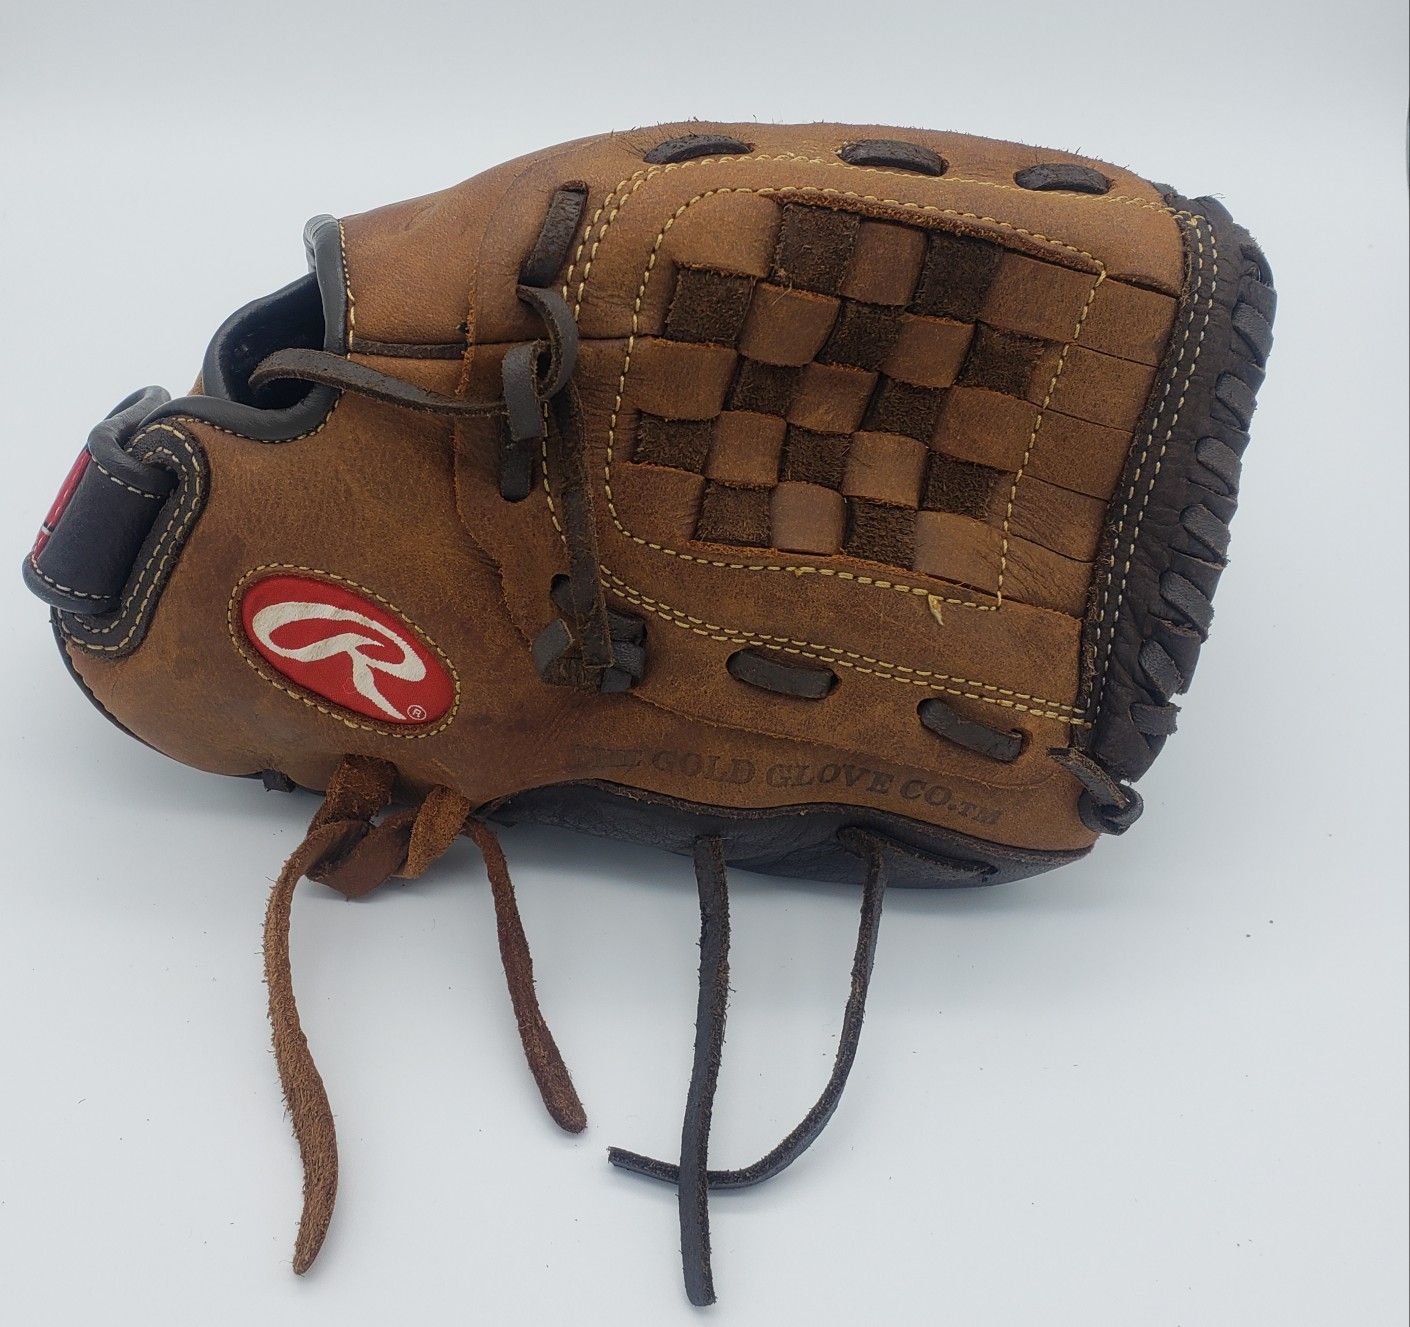 Rawlings Baseball Glove Mitt 11" PP110BC Player Preferred Right Hand Throw .